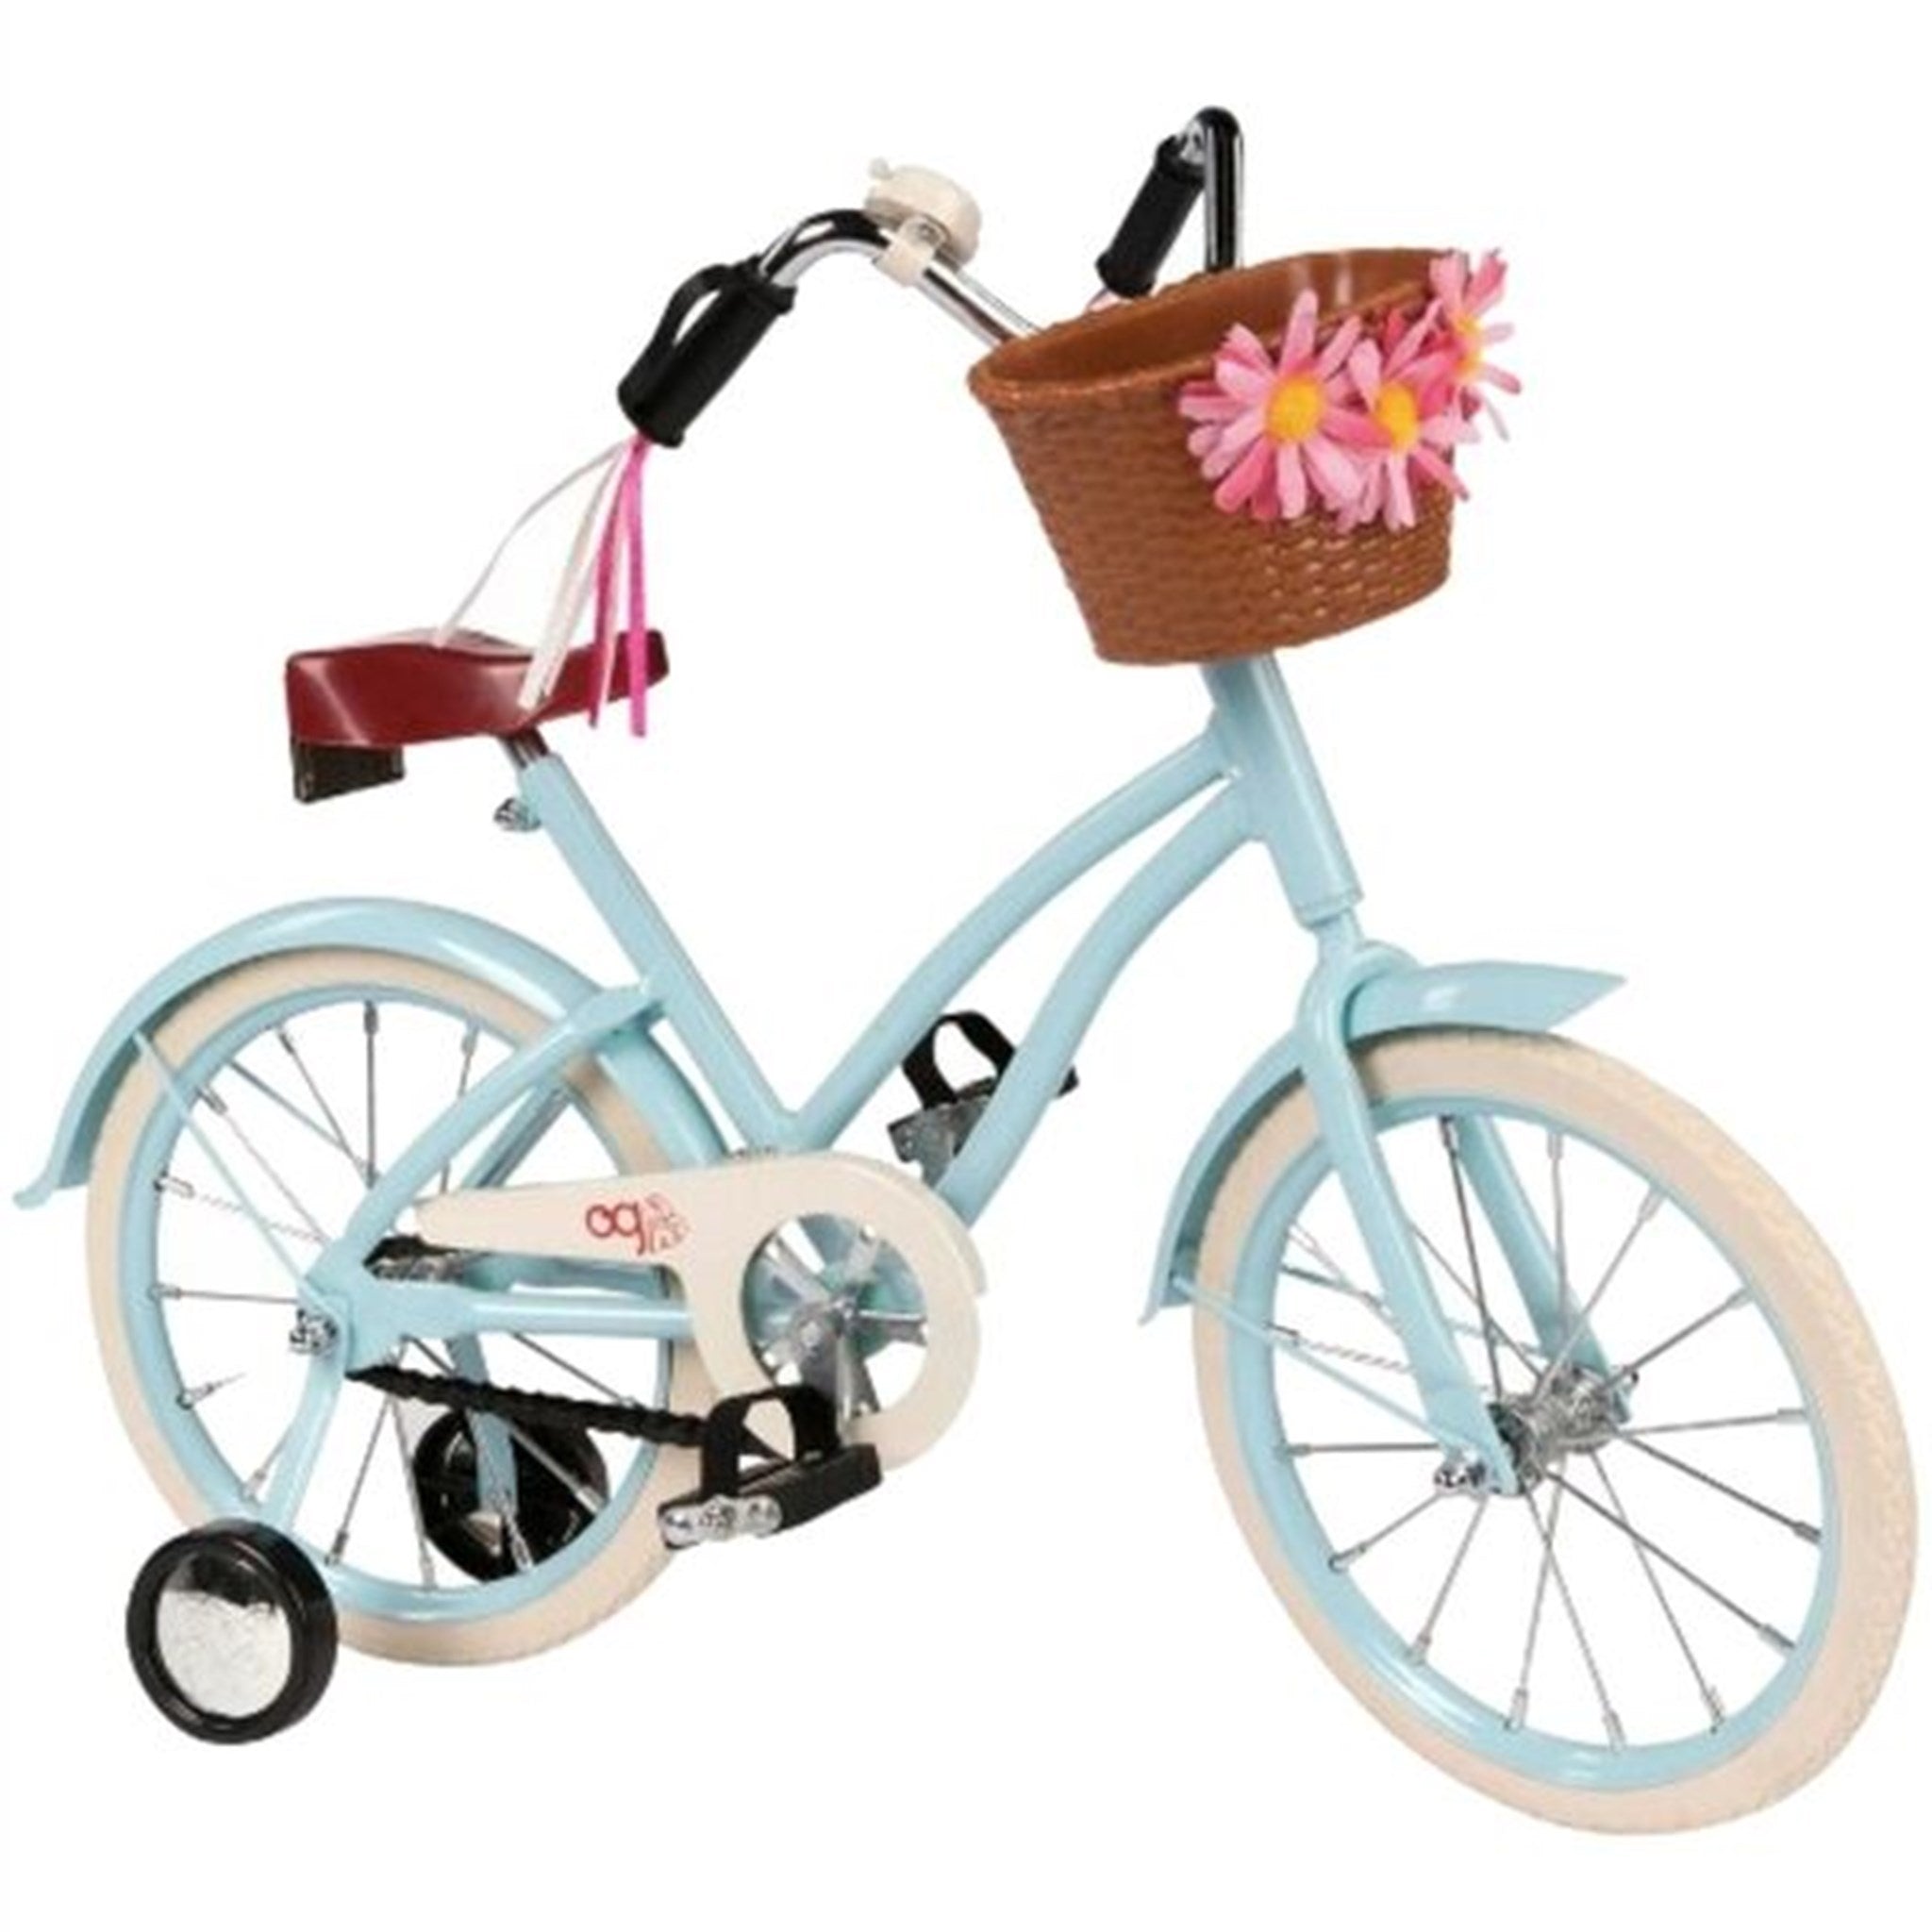 Our Generation Cykel med Støttehjul